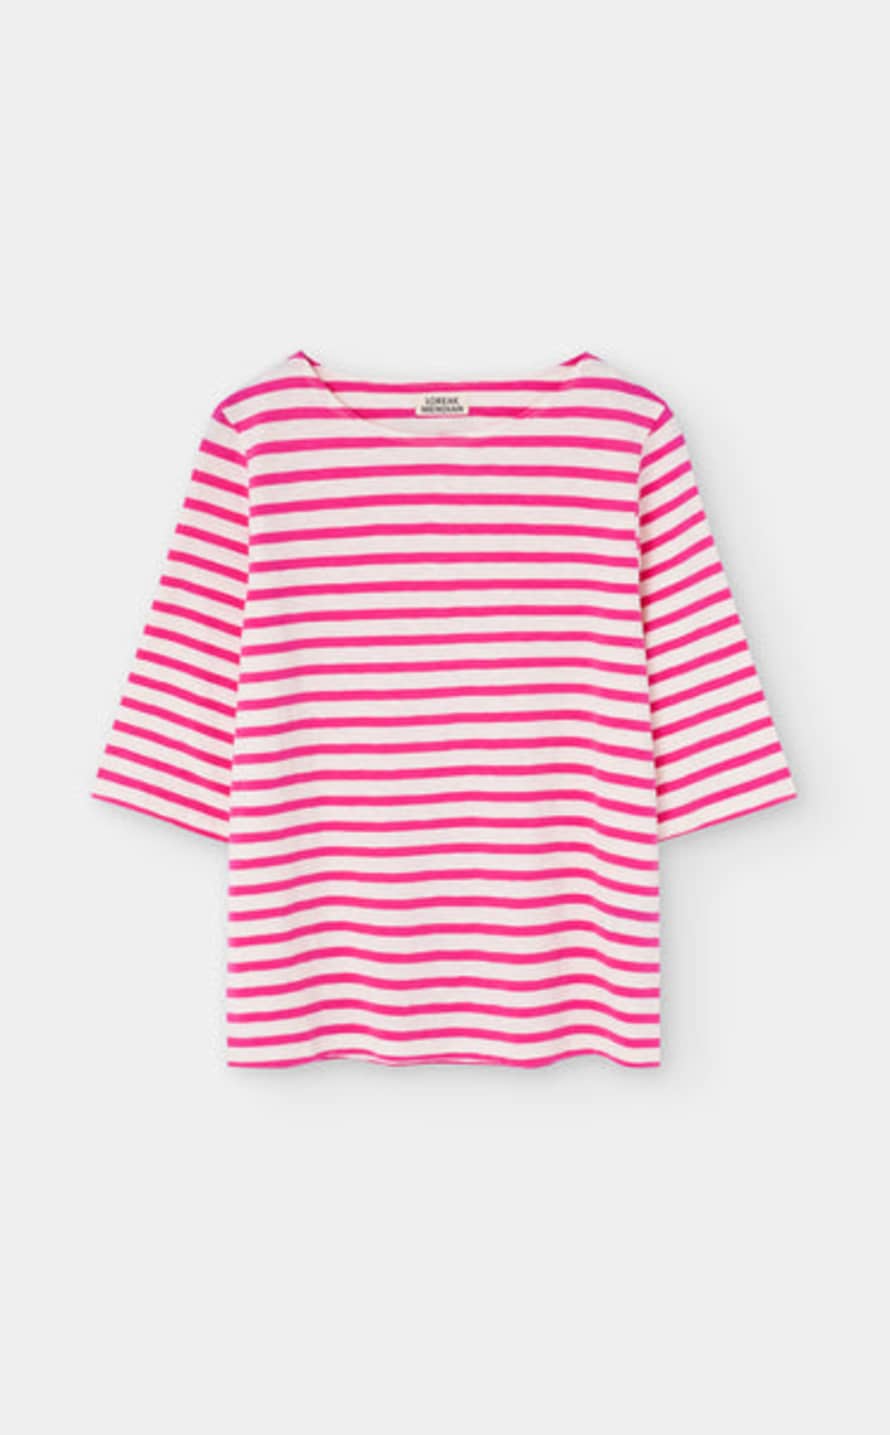 Loreak Mendian Bogak Short Sleeved T Shirt - Pink/ White